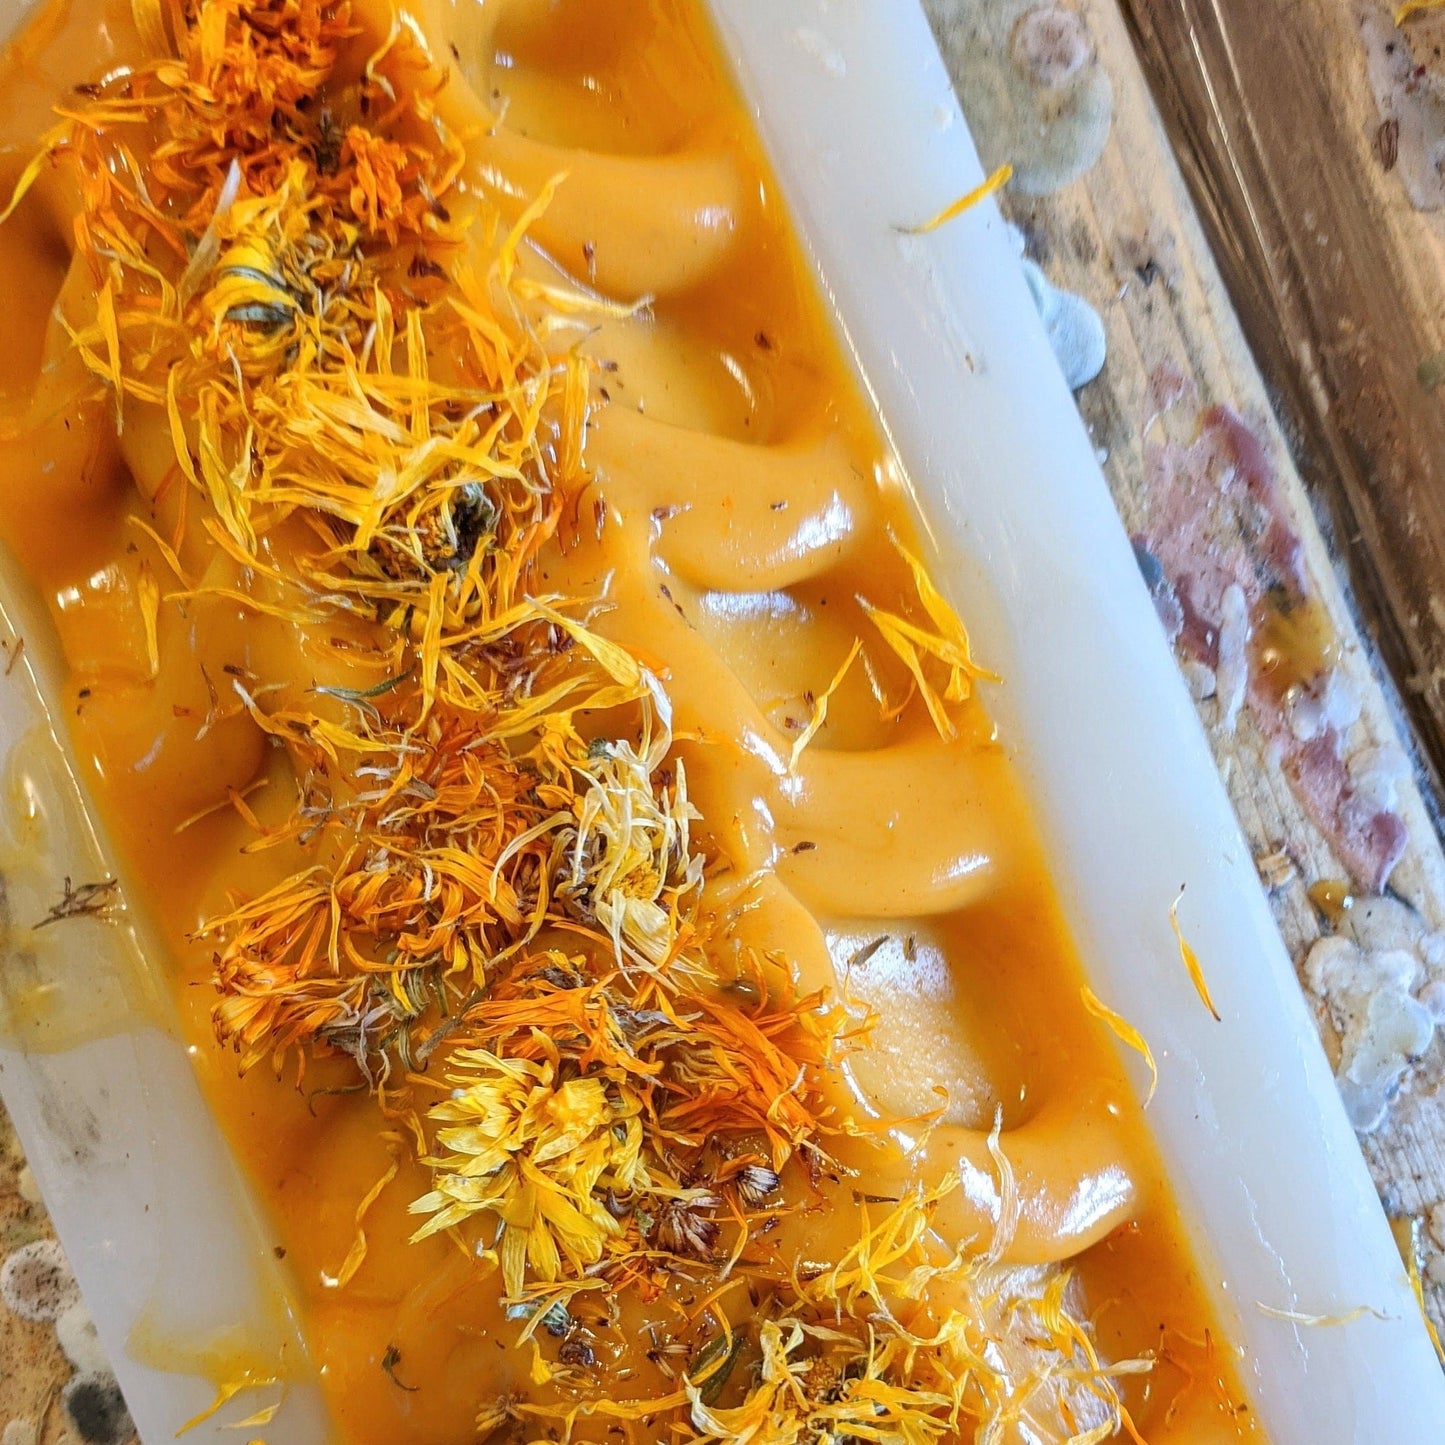 Natural Soap | SUNSHINE - Lemon Scented Calendula & Carrot Soap